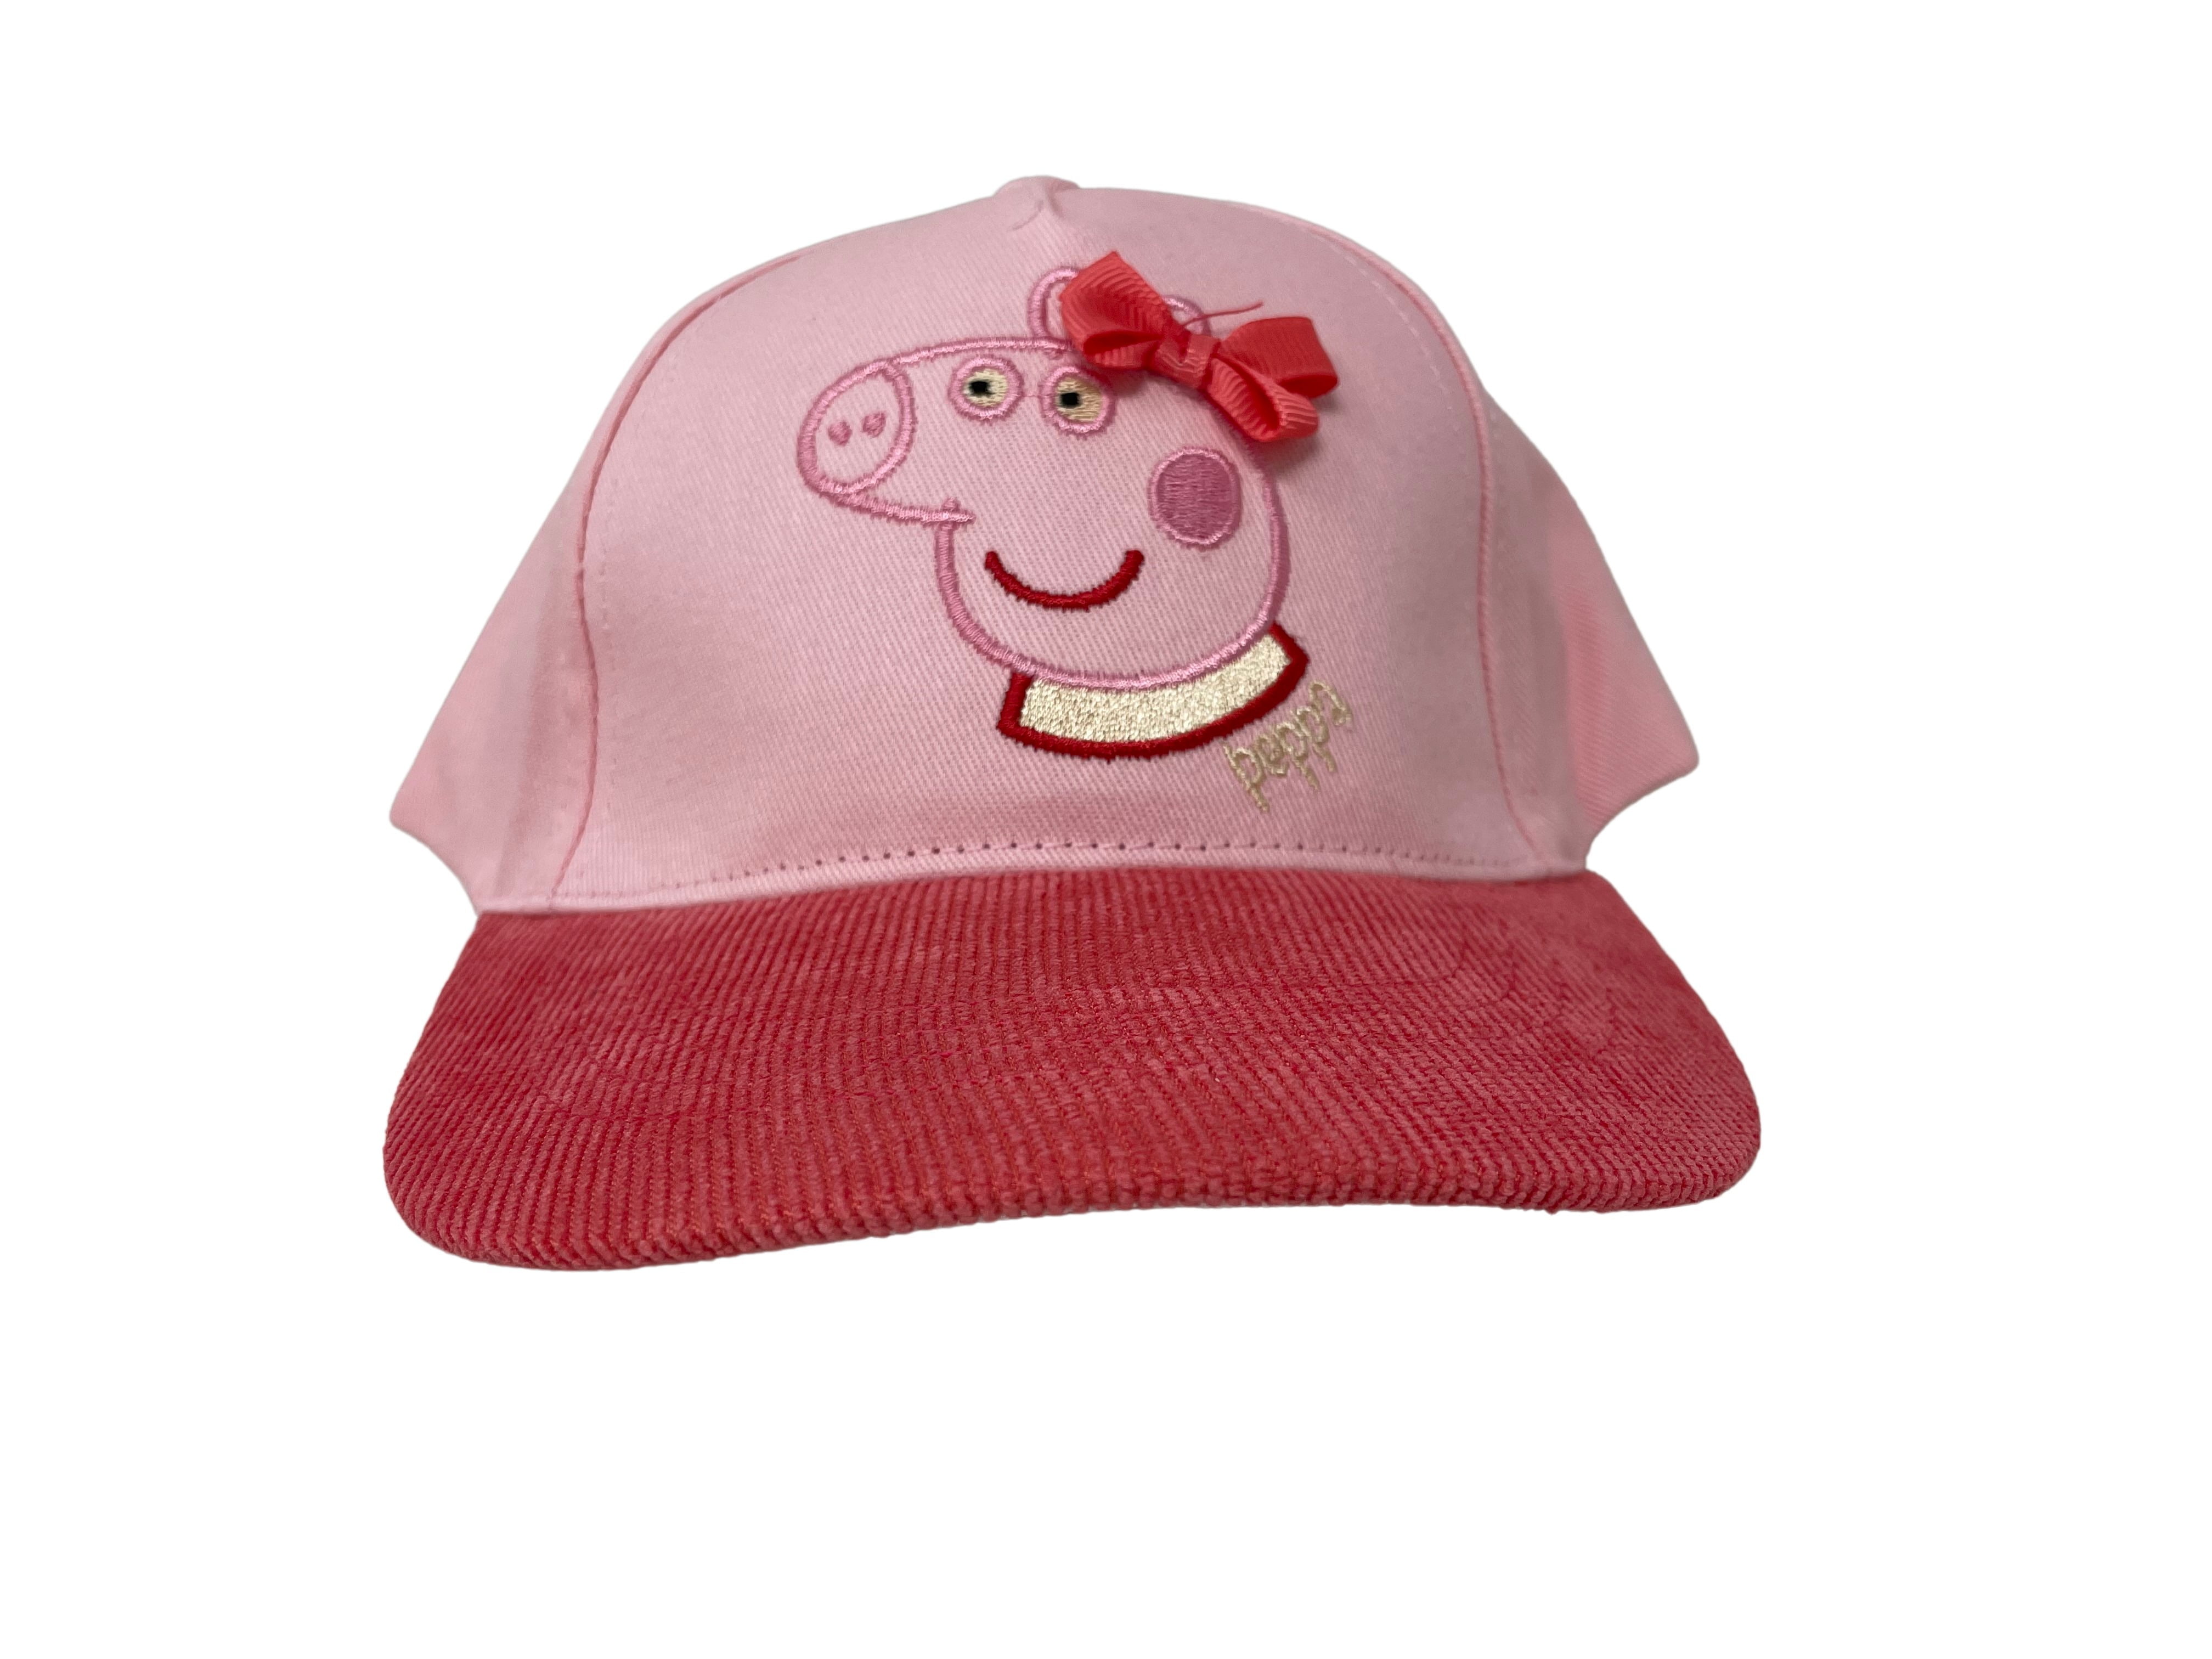 Angry Birds Star Wars Girls Princess Leia Beanie Winter Hat Pink Stocking Cap